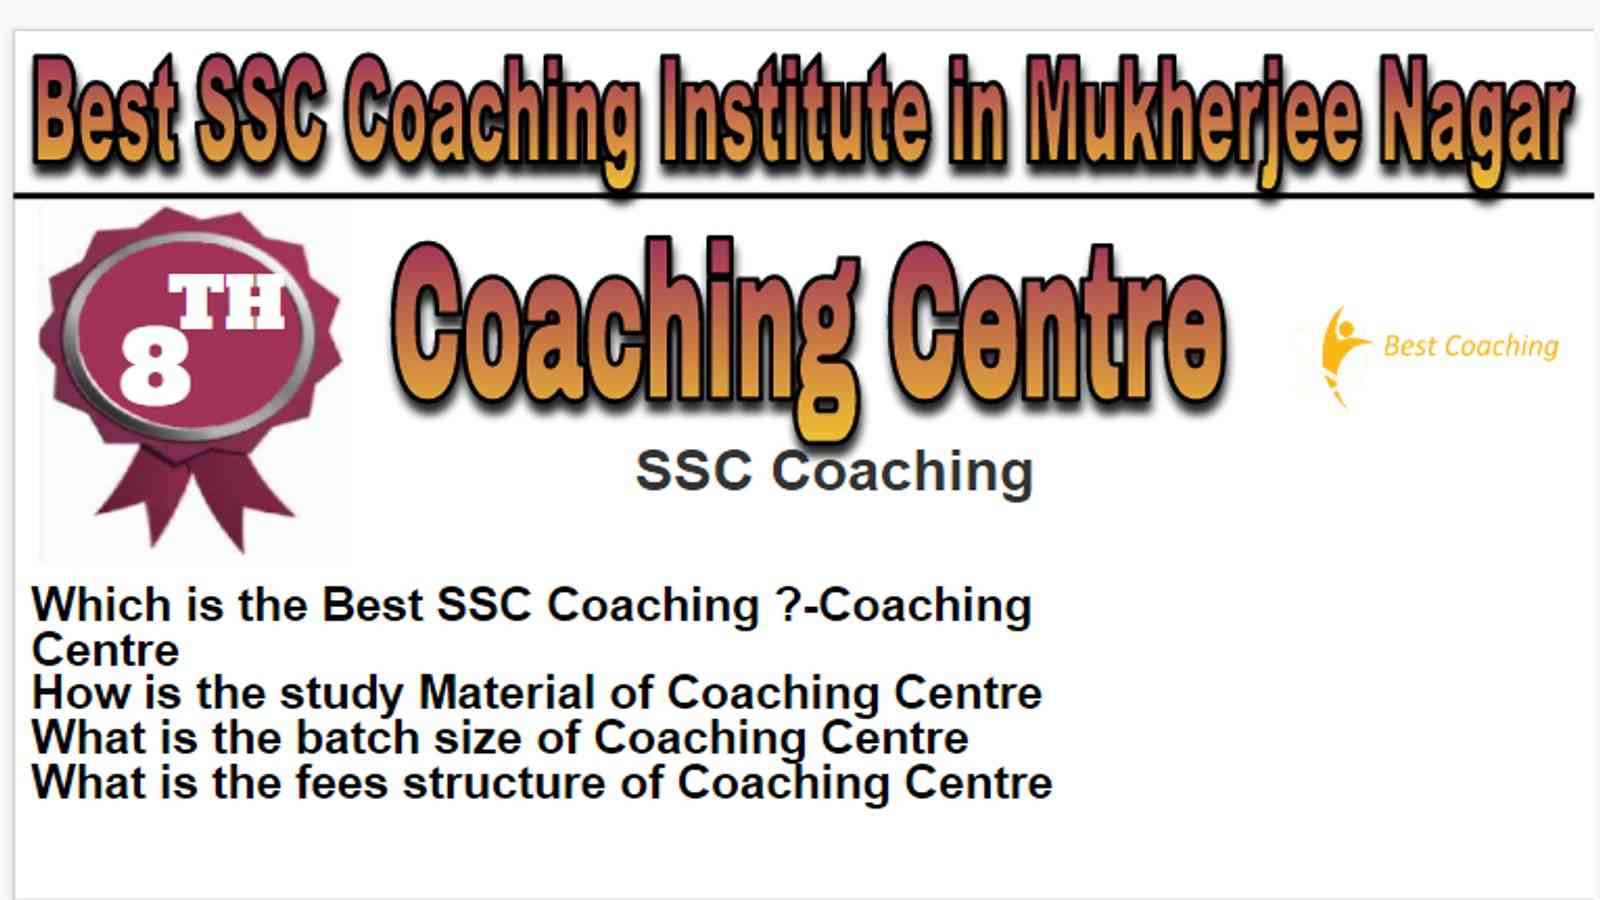 Rank 8 Best SSC Coaching Institute in Mukherjee Nagar